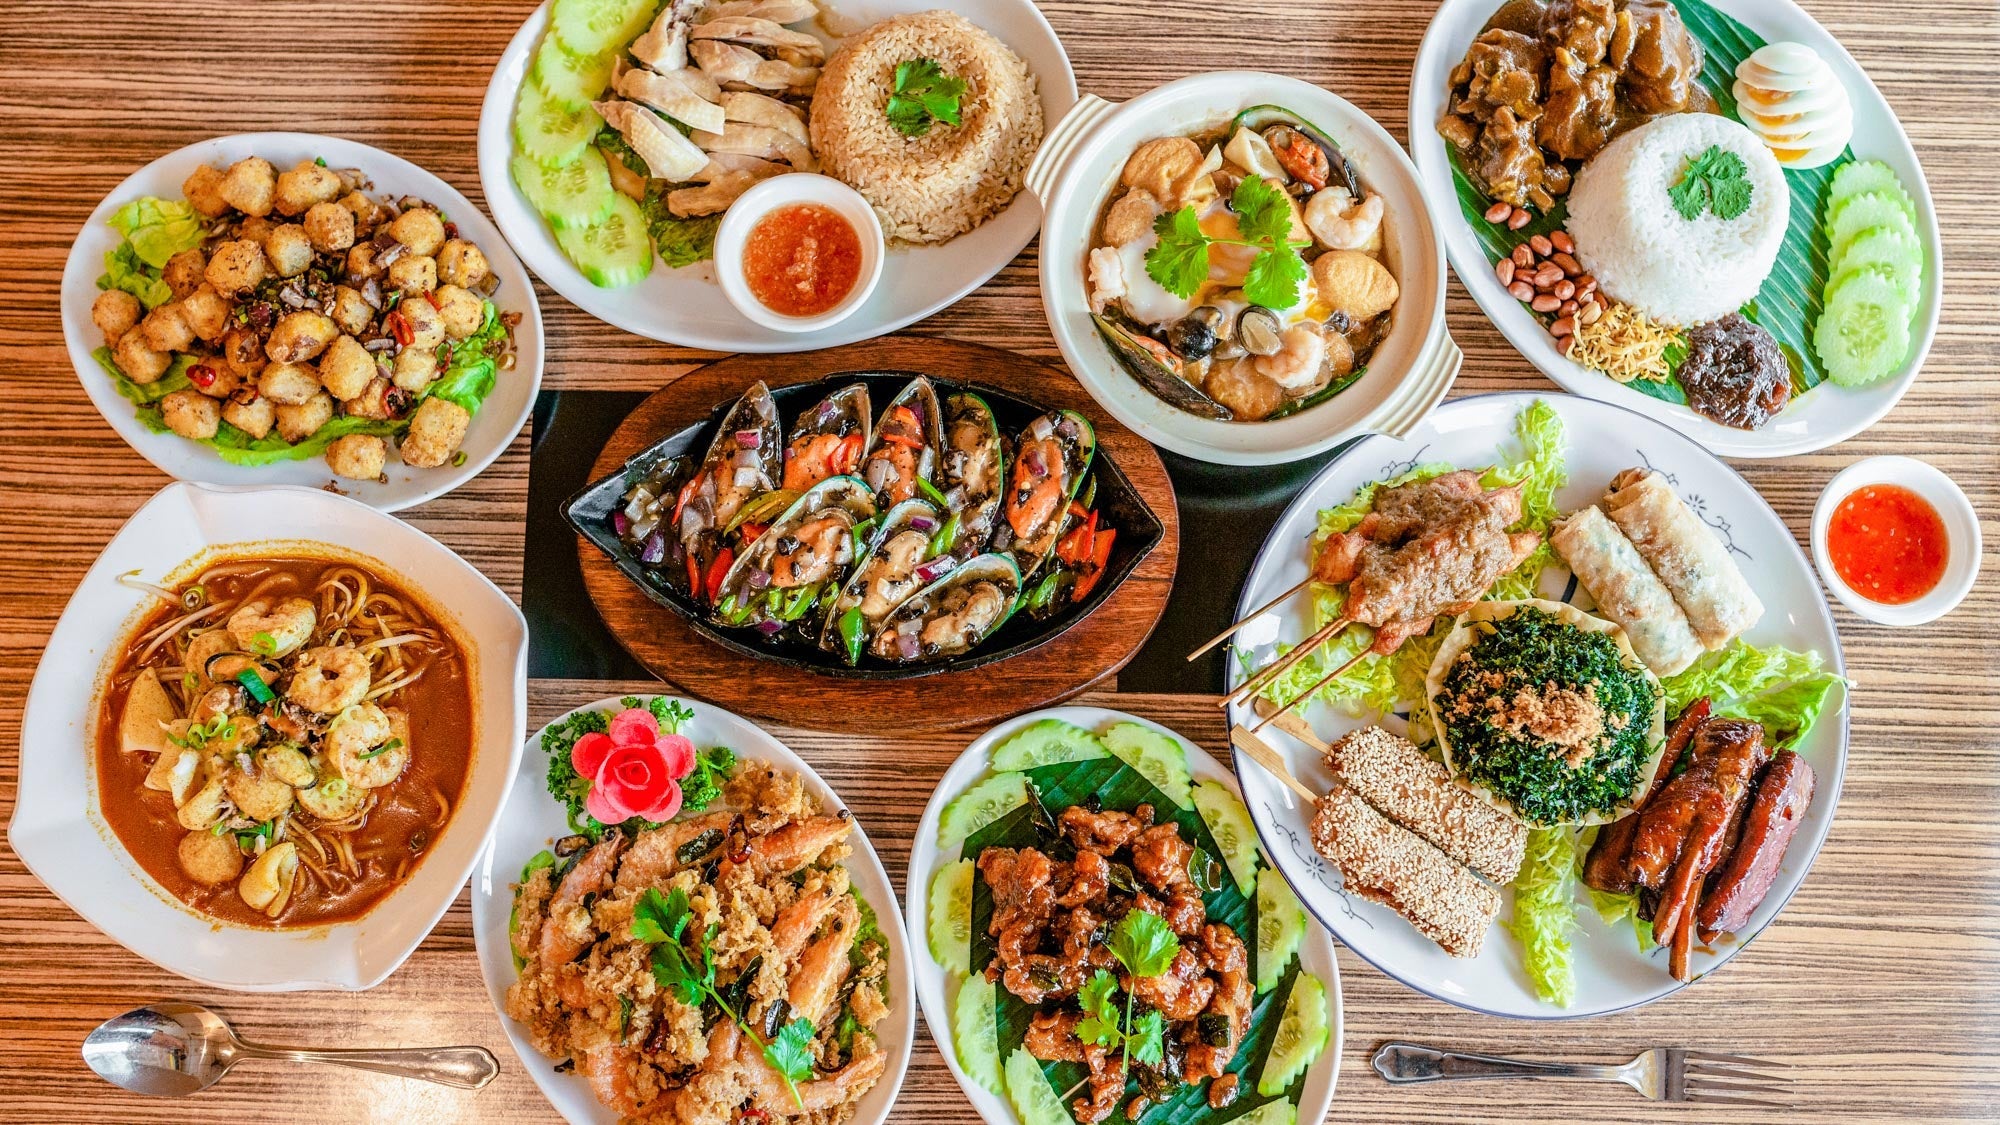 Supreme Asian Cuisine